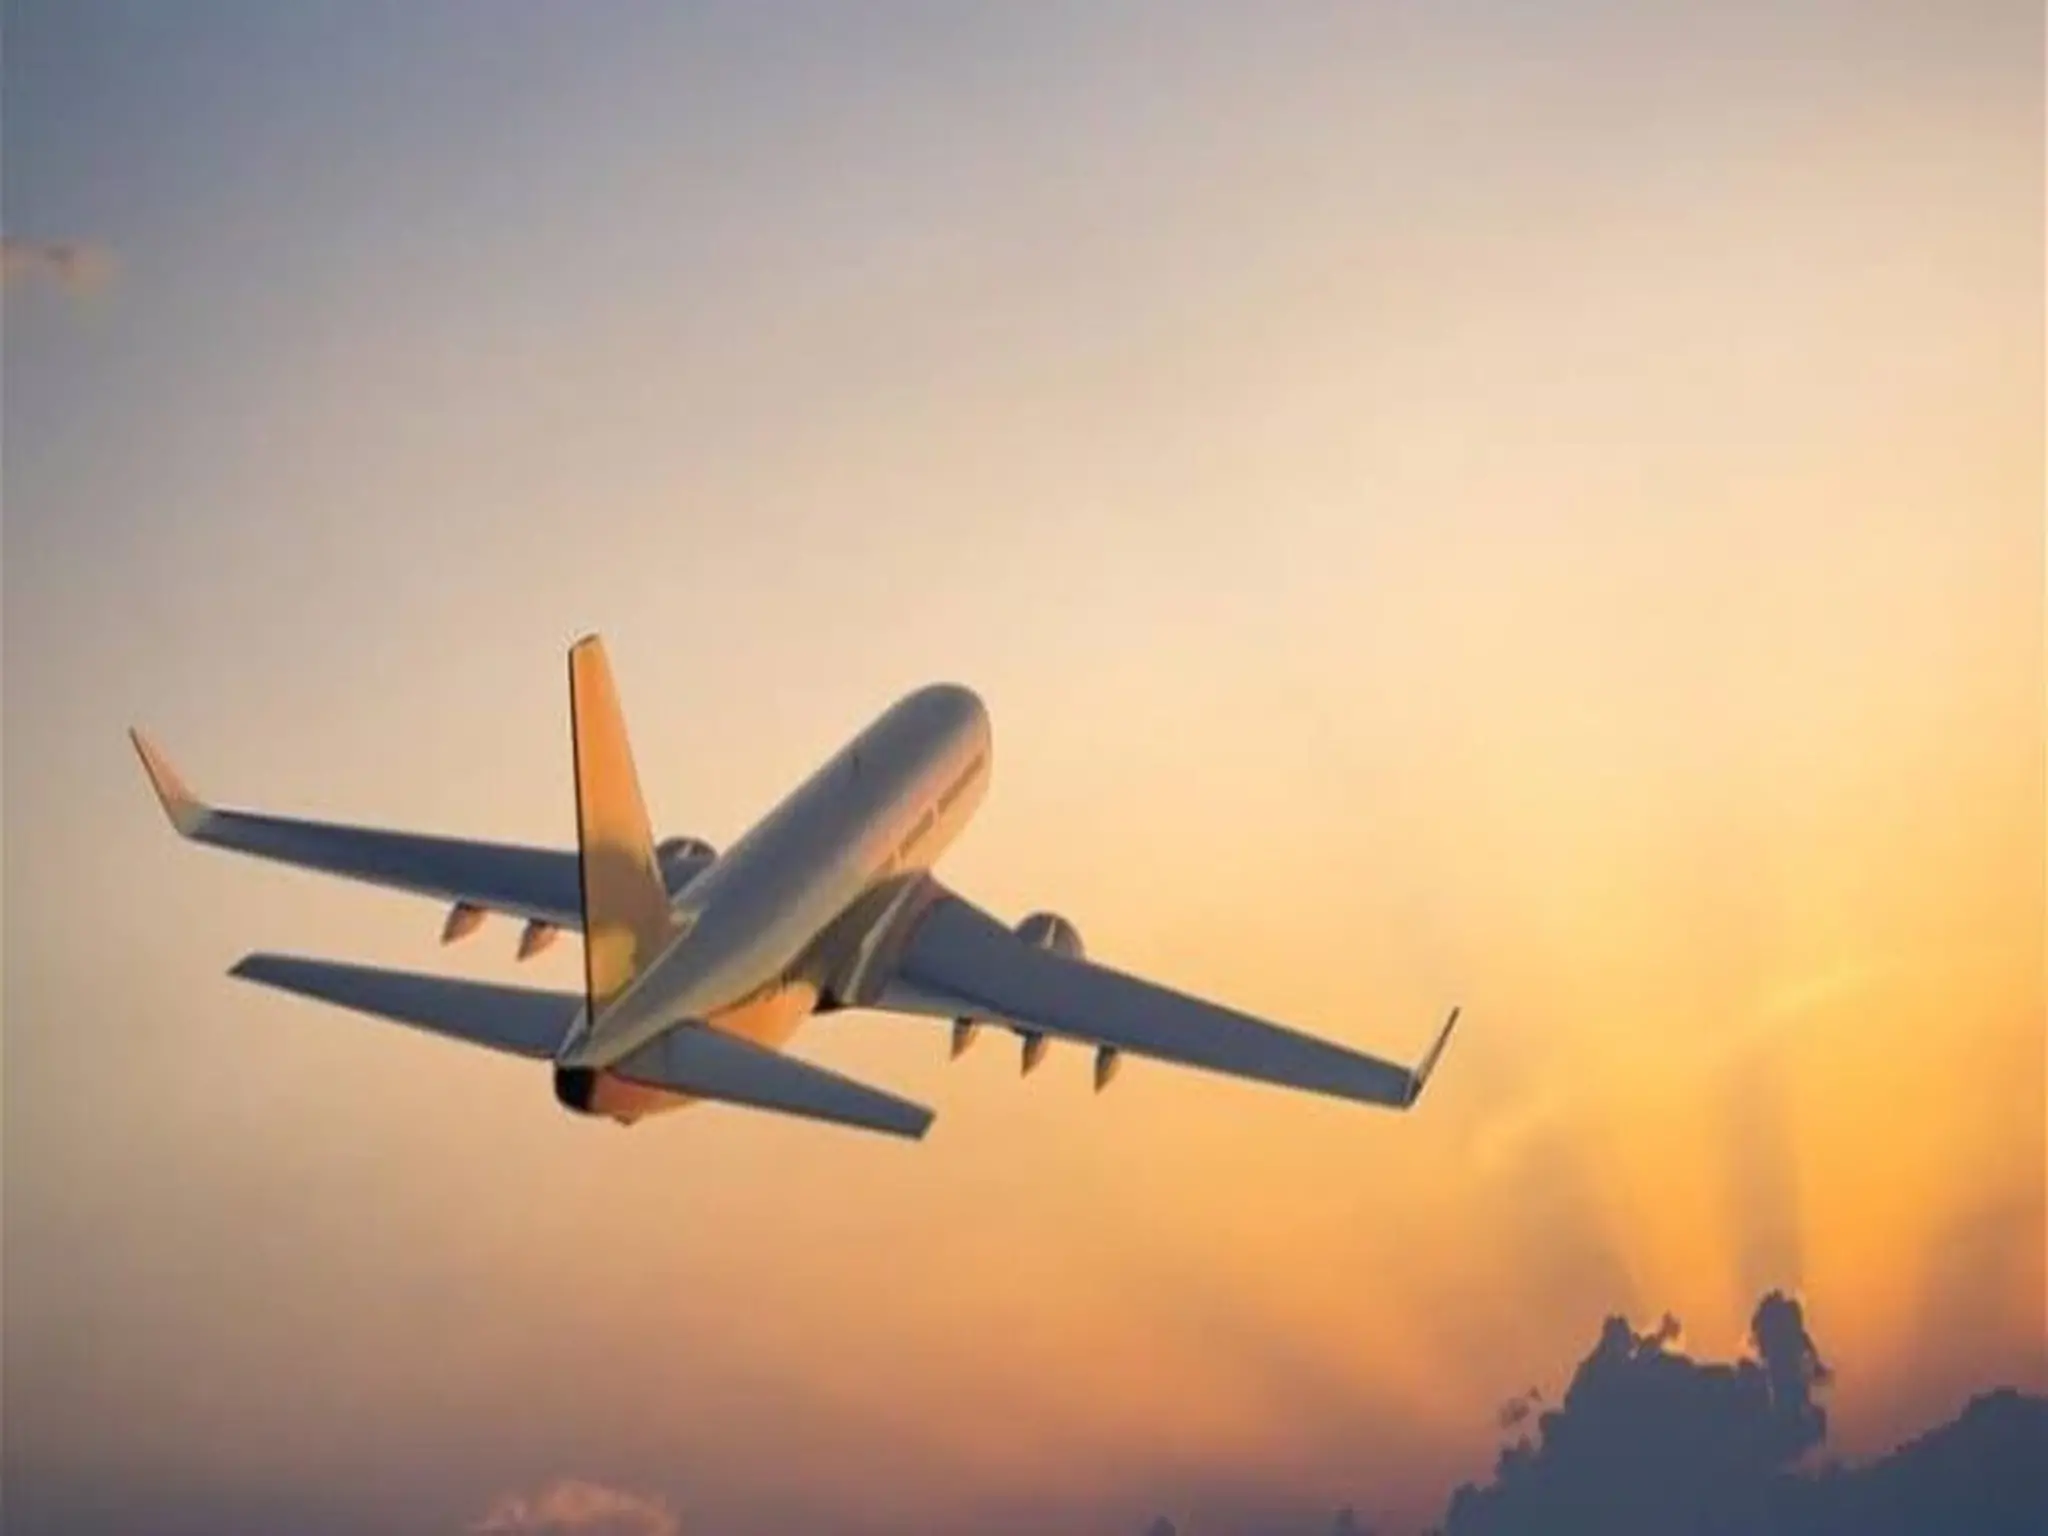 The UAE announces initiatives to facilitate travel procedures through airports